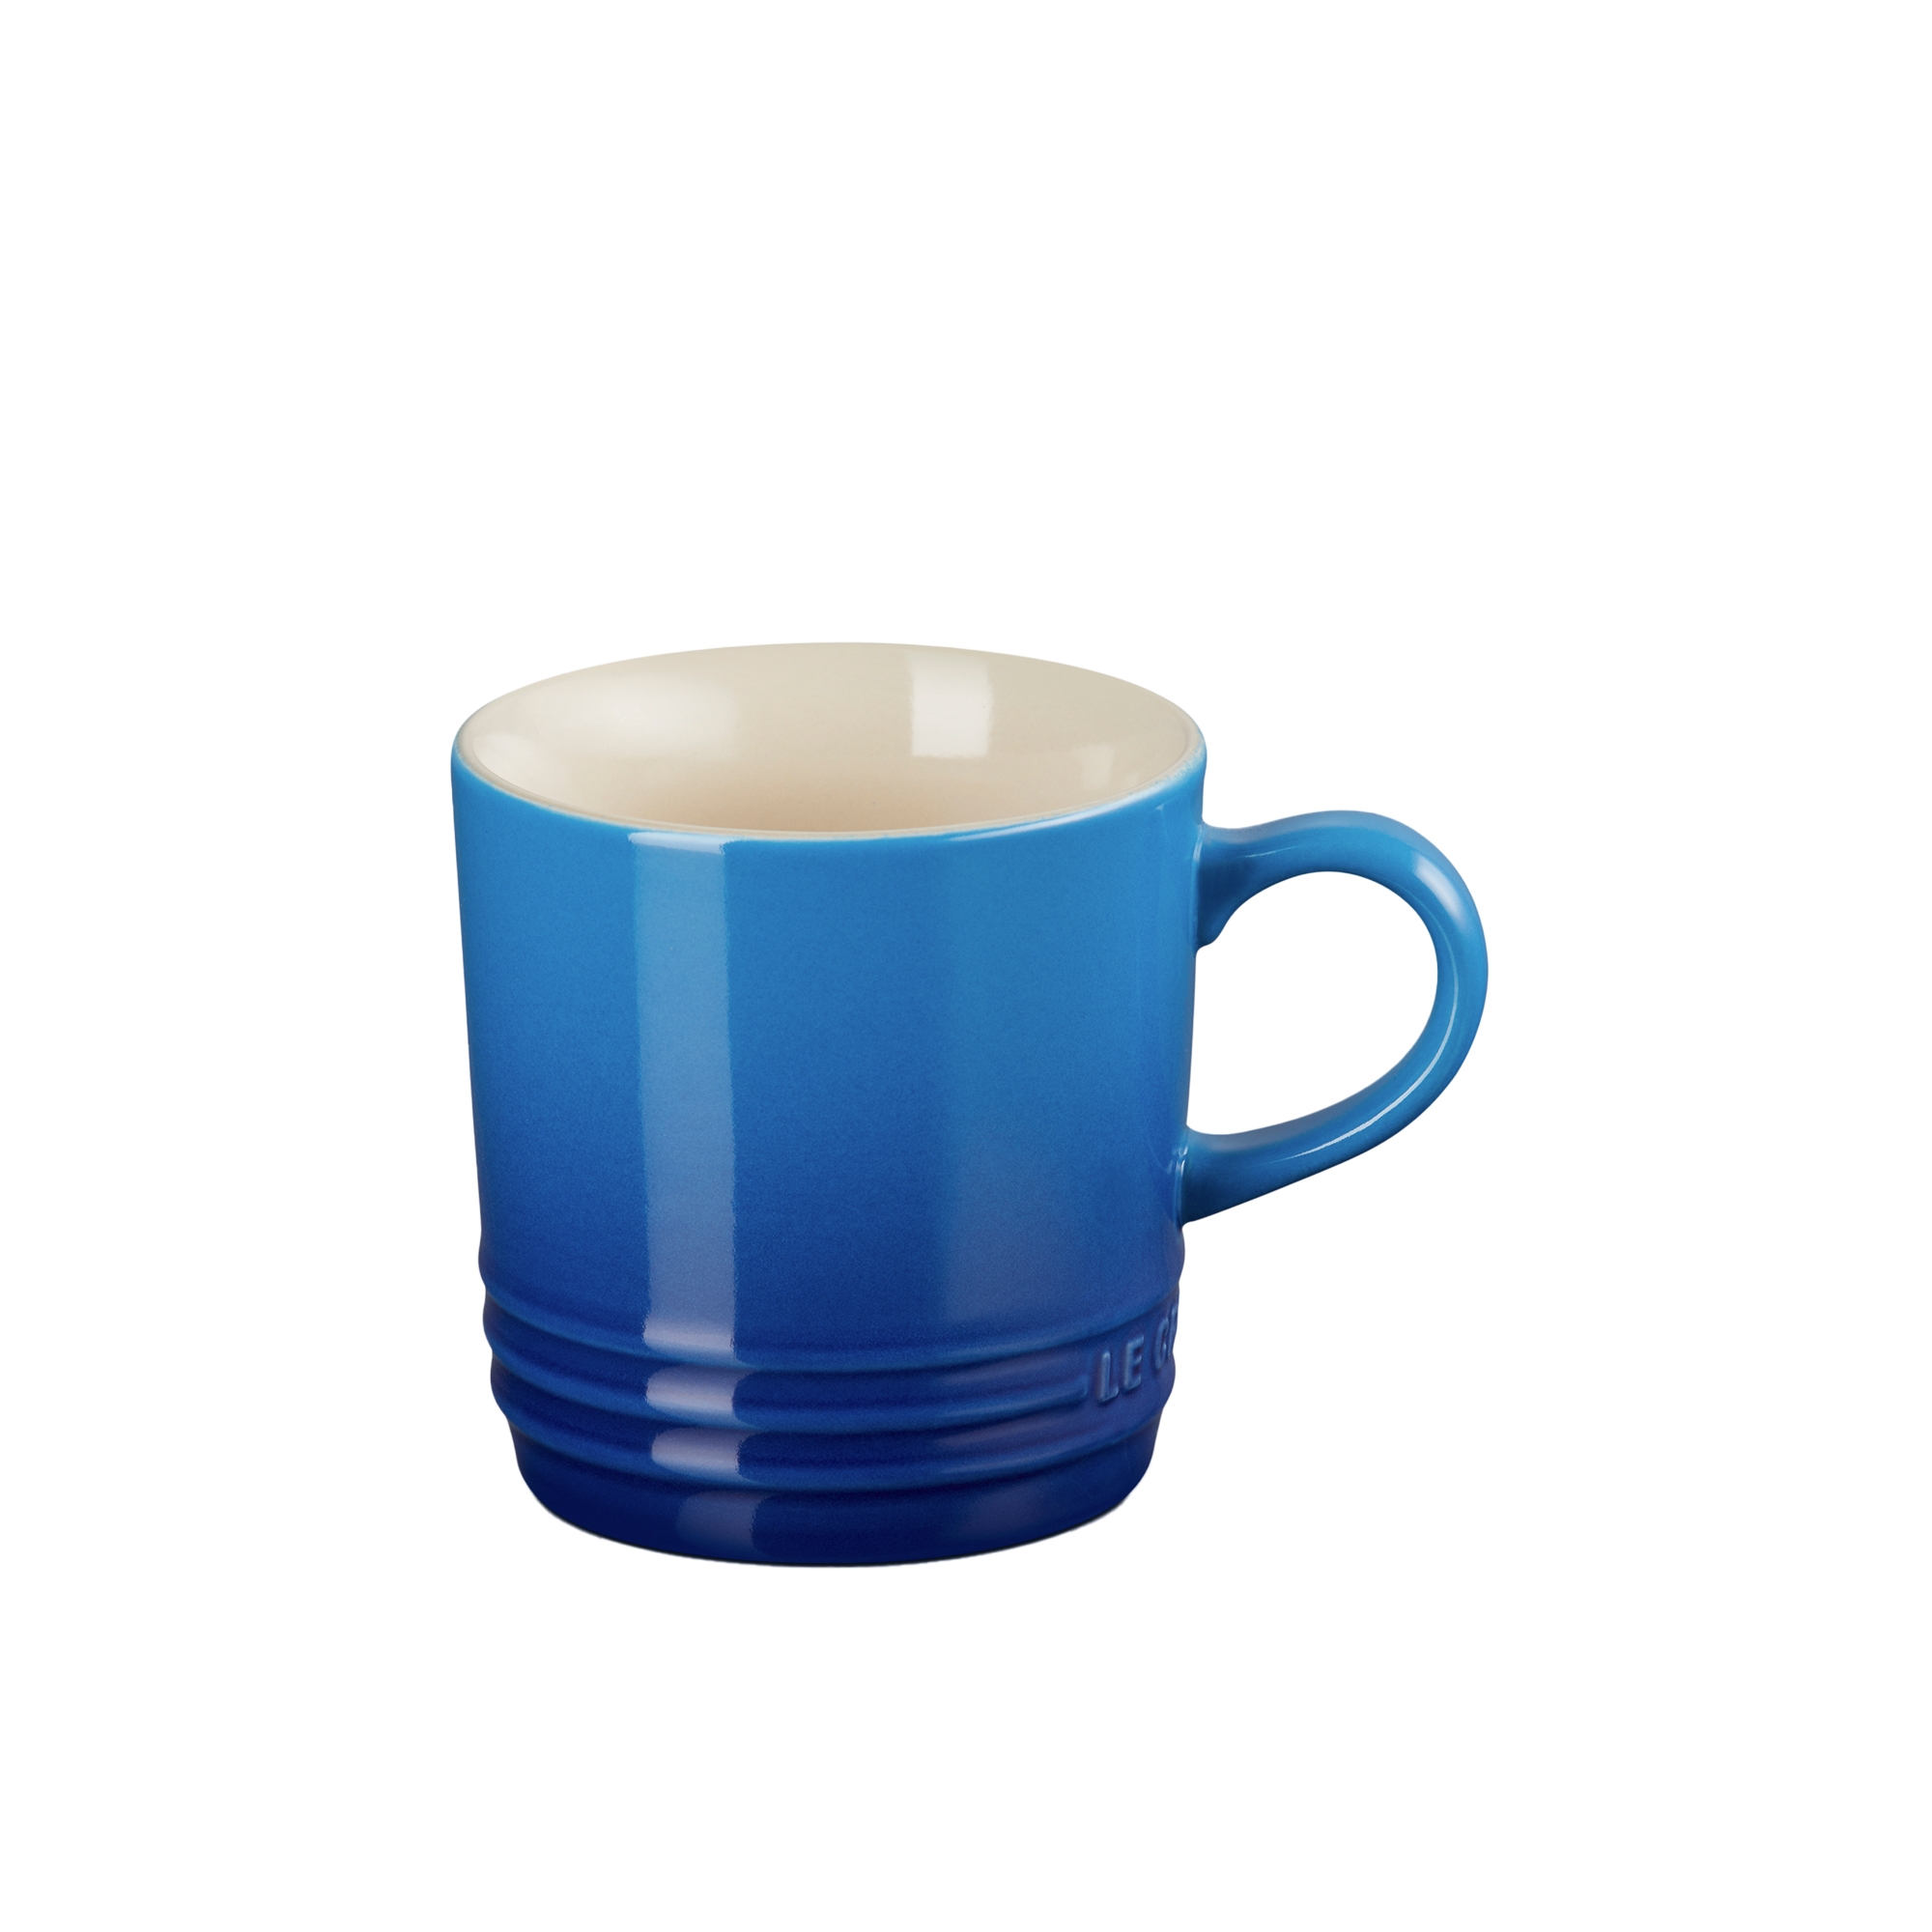 Le Creuset Stoneware Cappuccino Mug 200ml Azure Blue Image 1